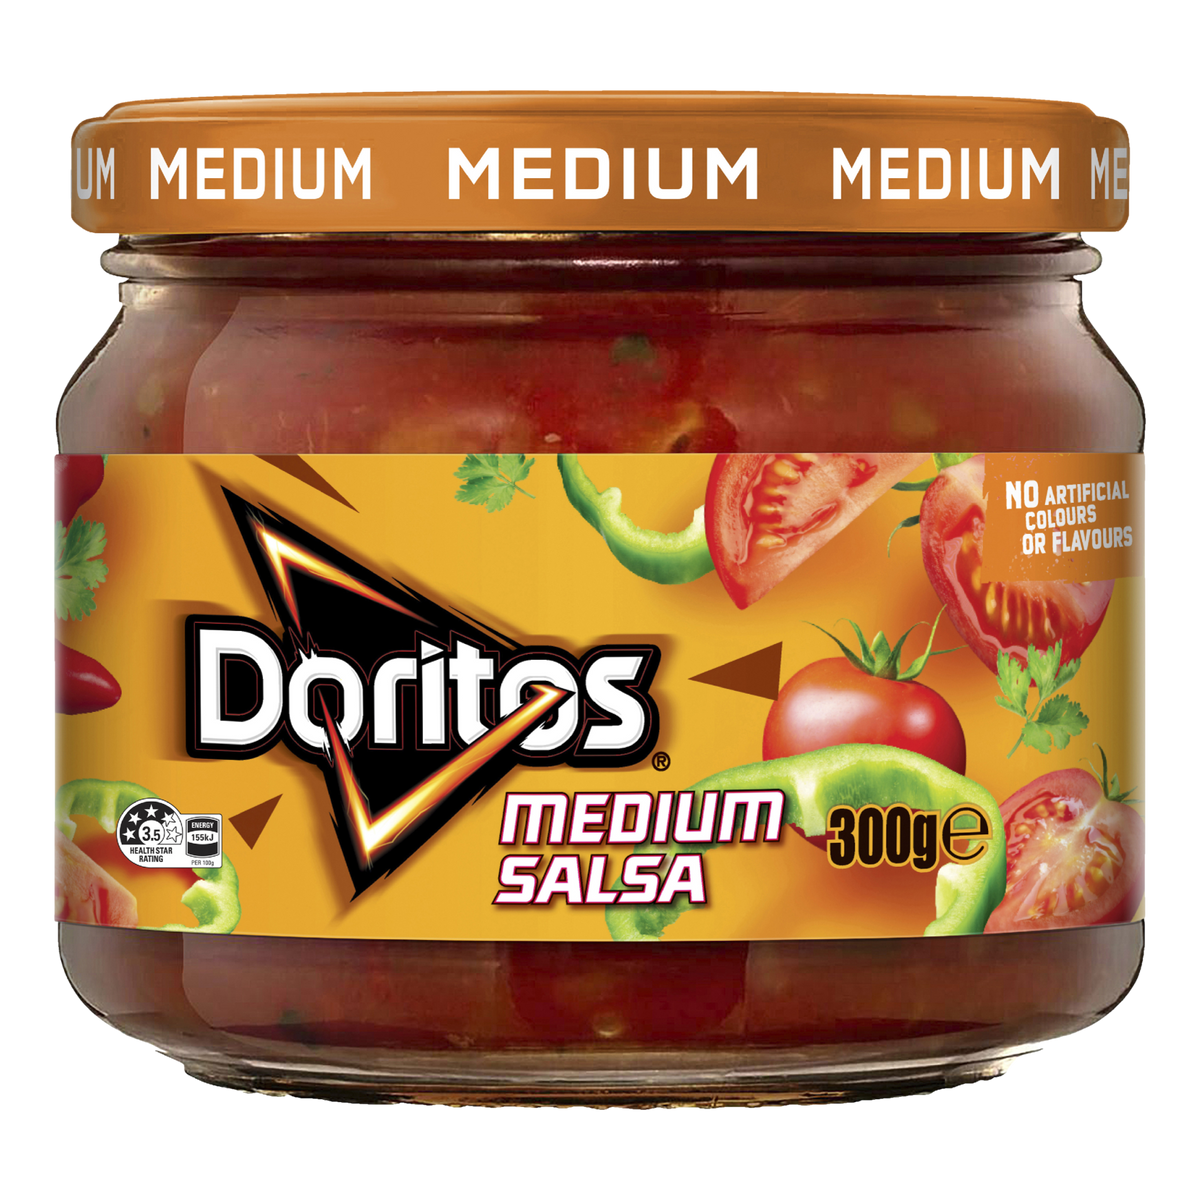 Doritos Medium Salsa 300g